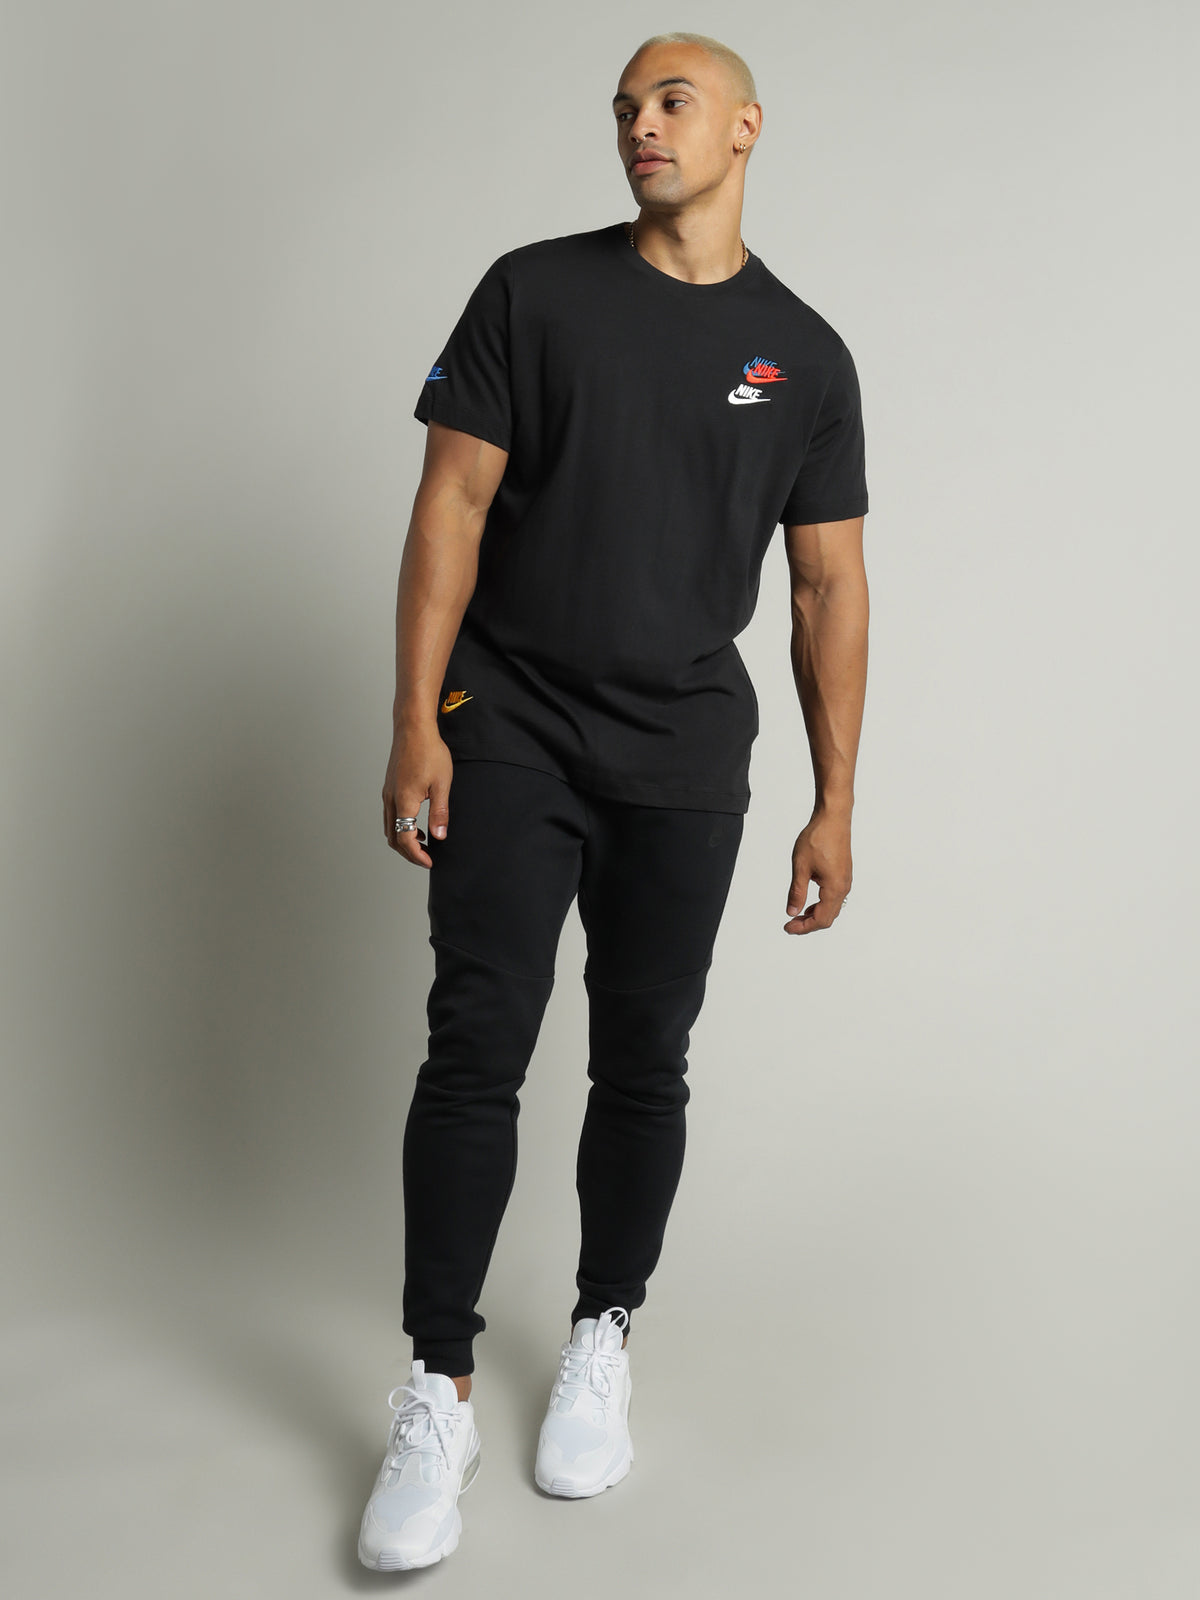 NSW Club Essentials T-Shirt in Black